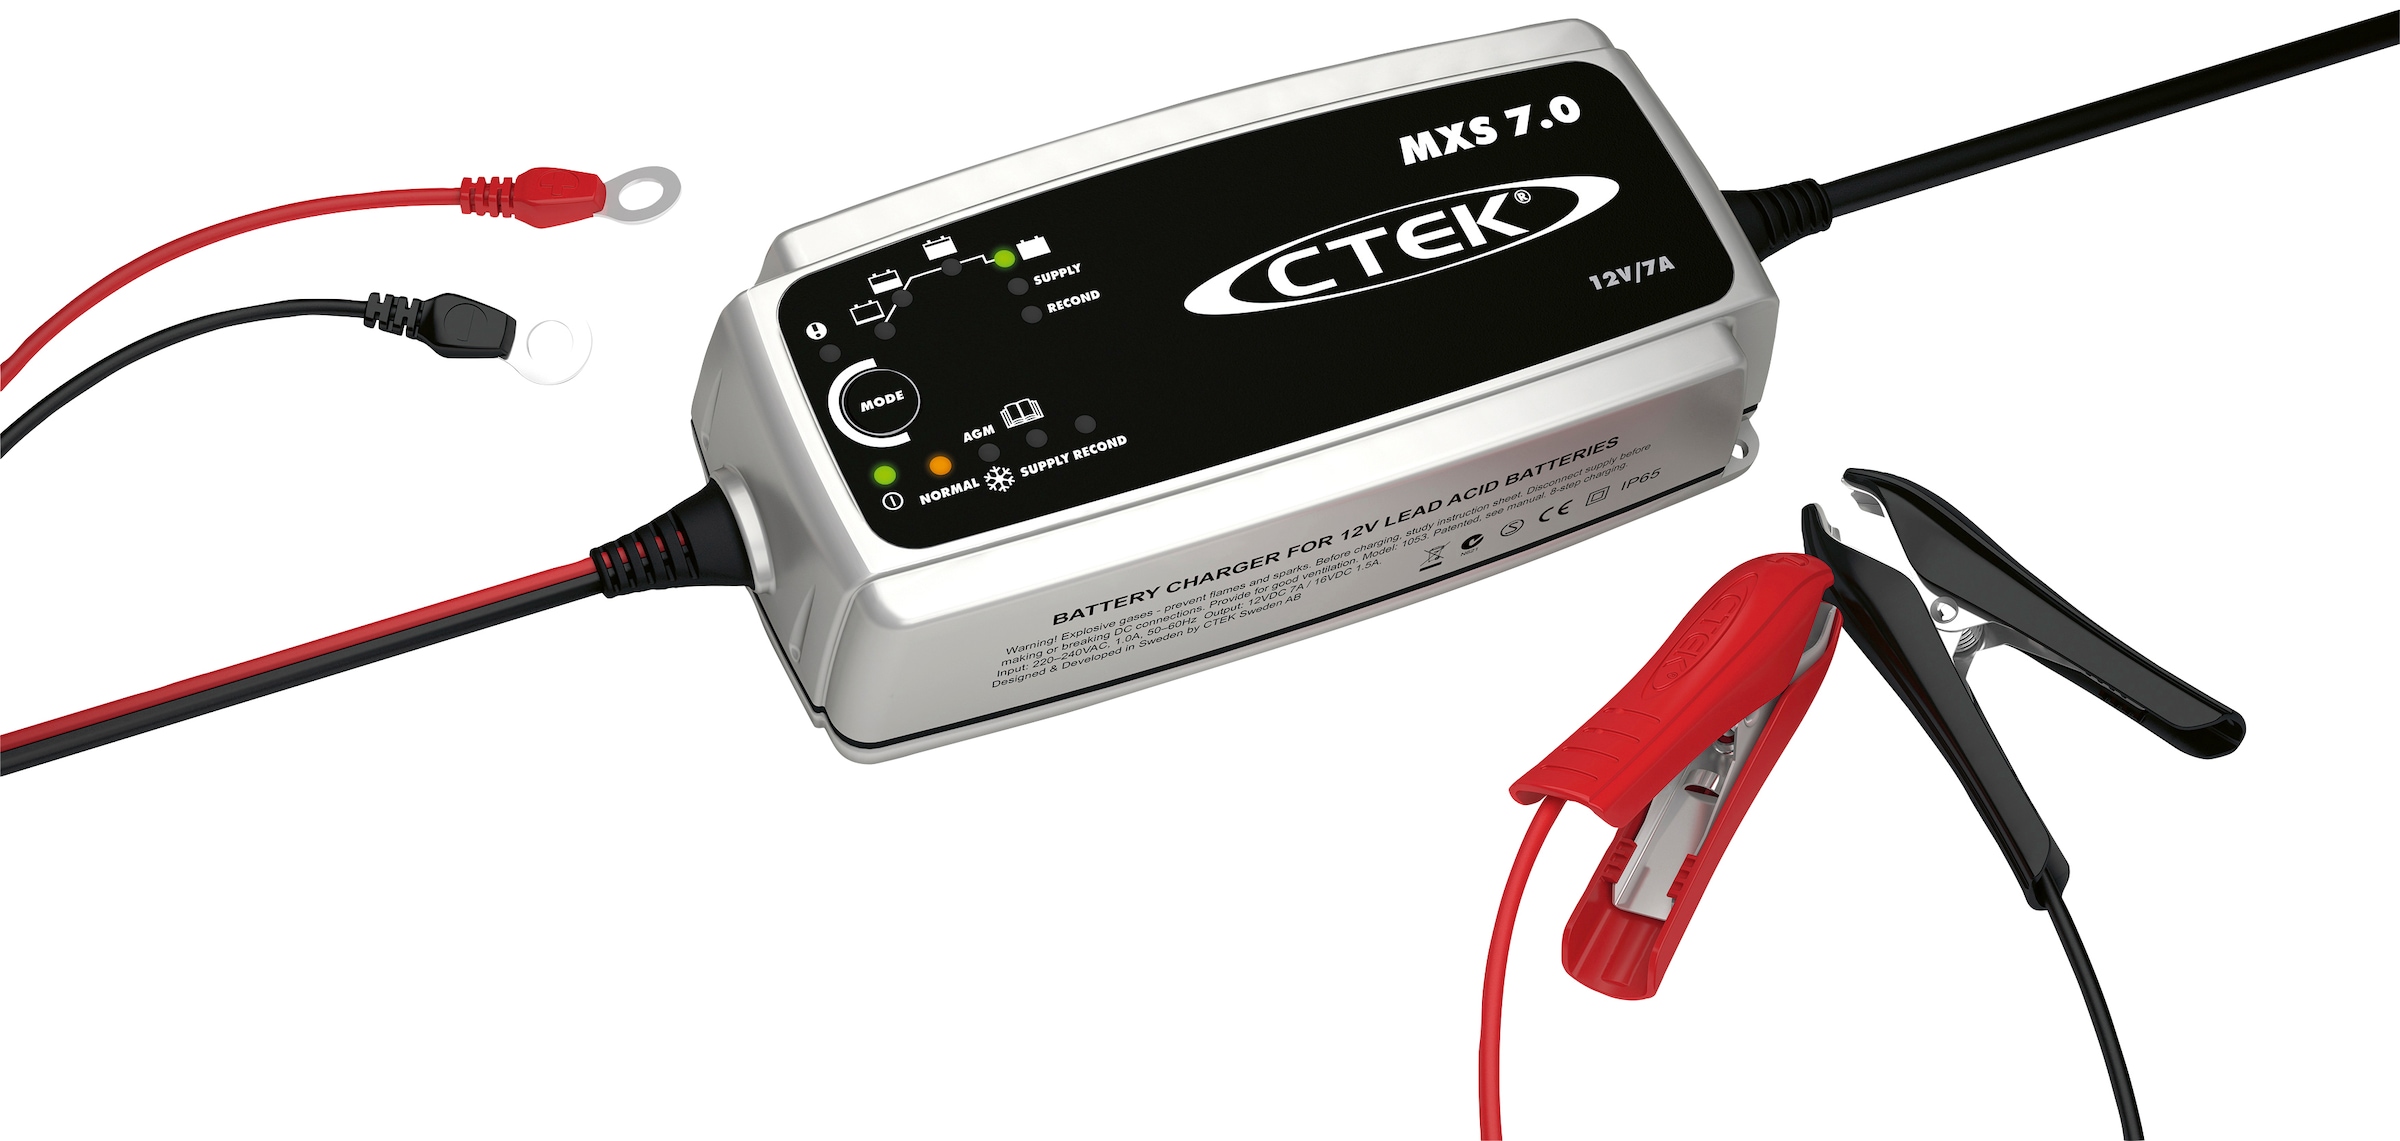 CTEK Batterie-Ladegerät »MXS 7.0«, Versorgungsprogramm / Supply-Modus